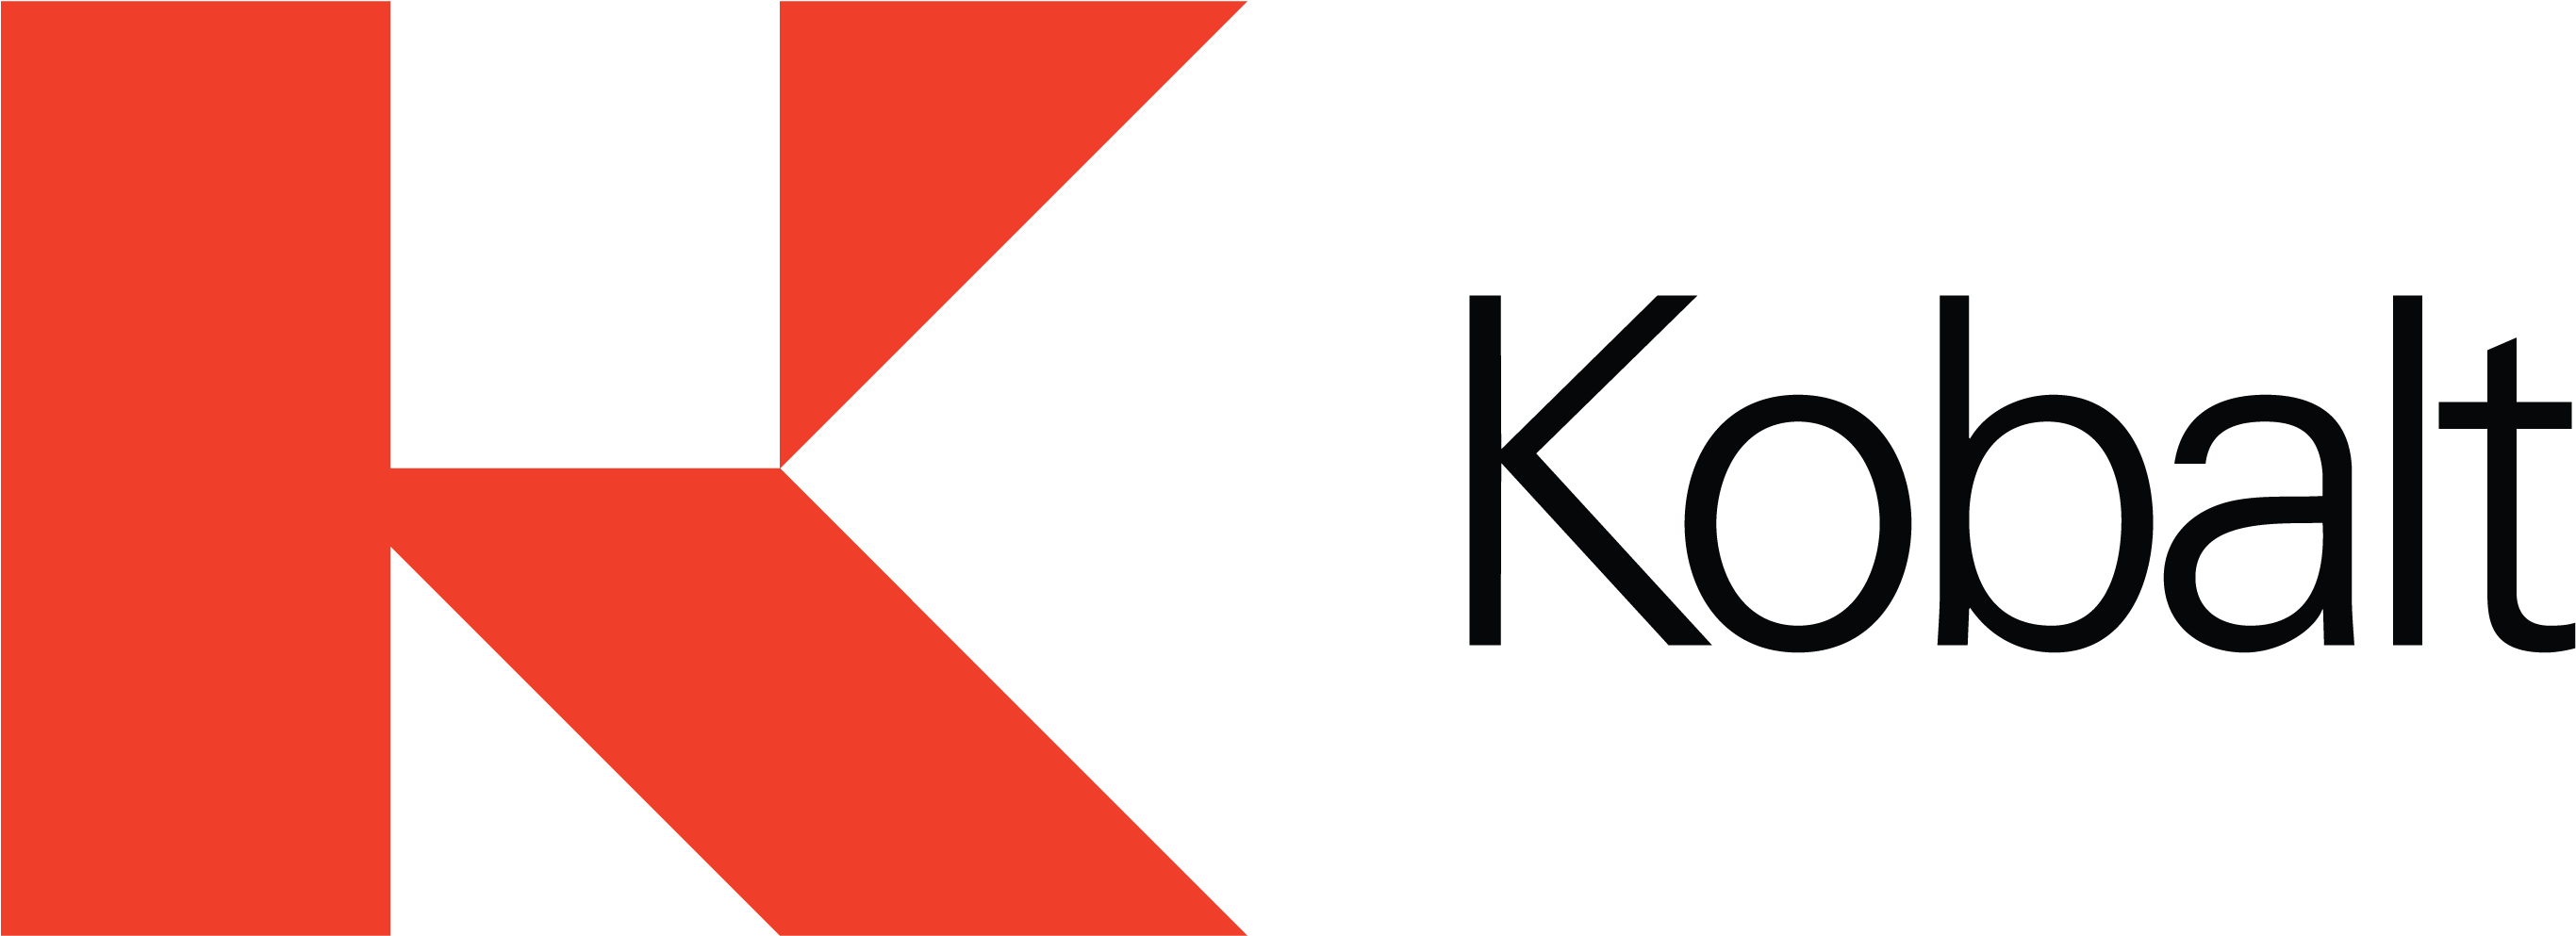 Coordinator, Digital Supply Chain Awal London - Kobalt Music Logo Png (3300x2550)